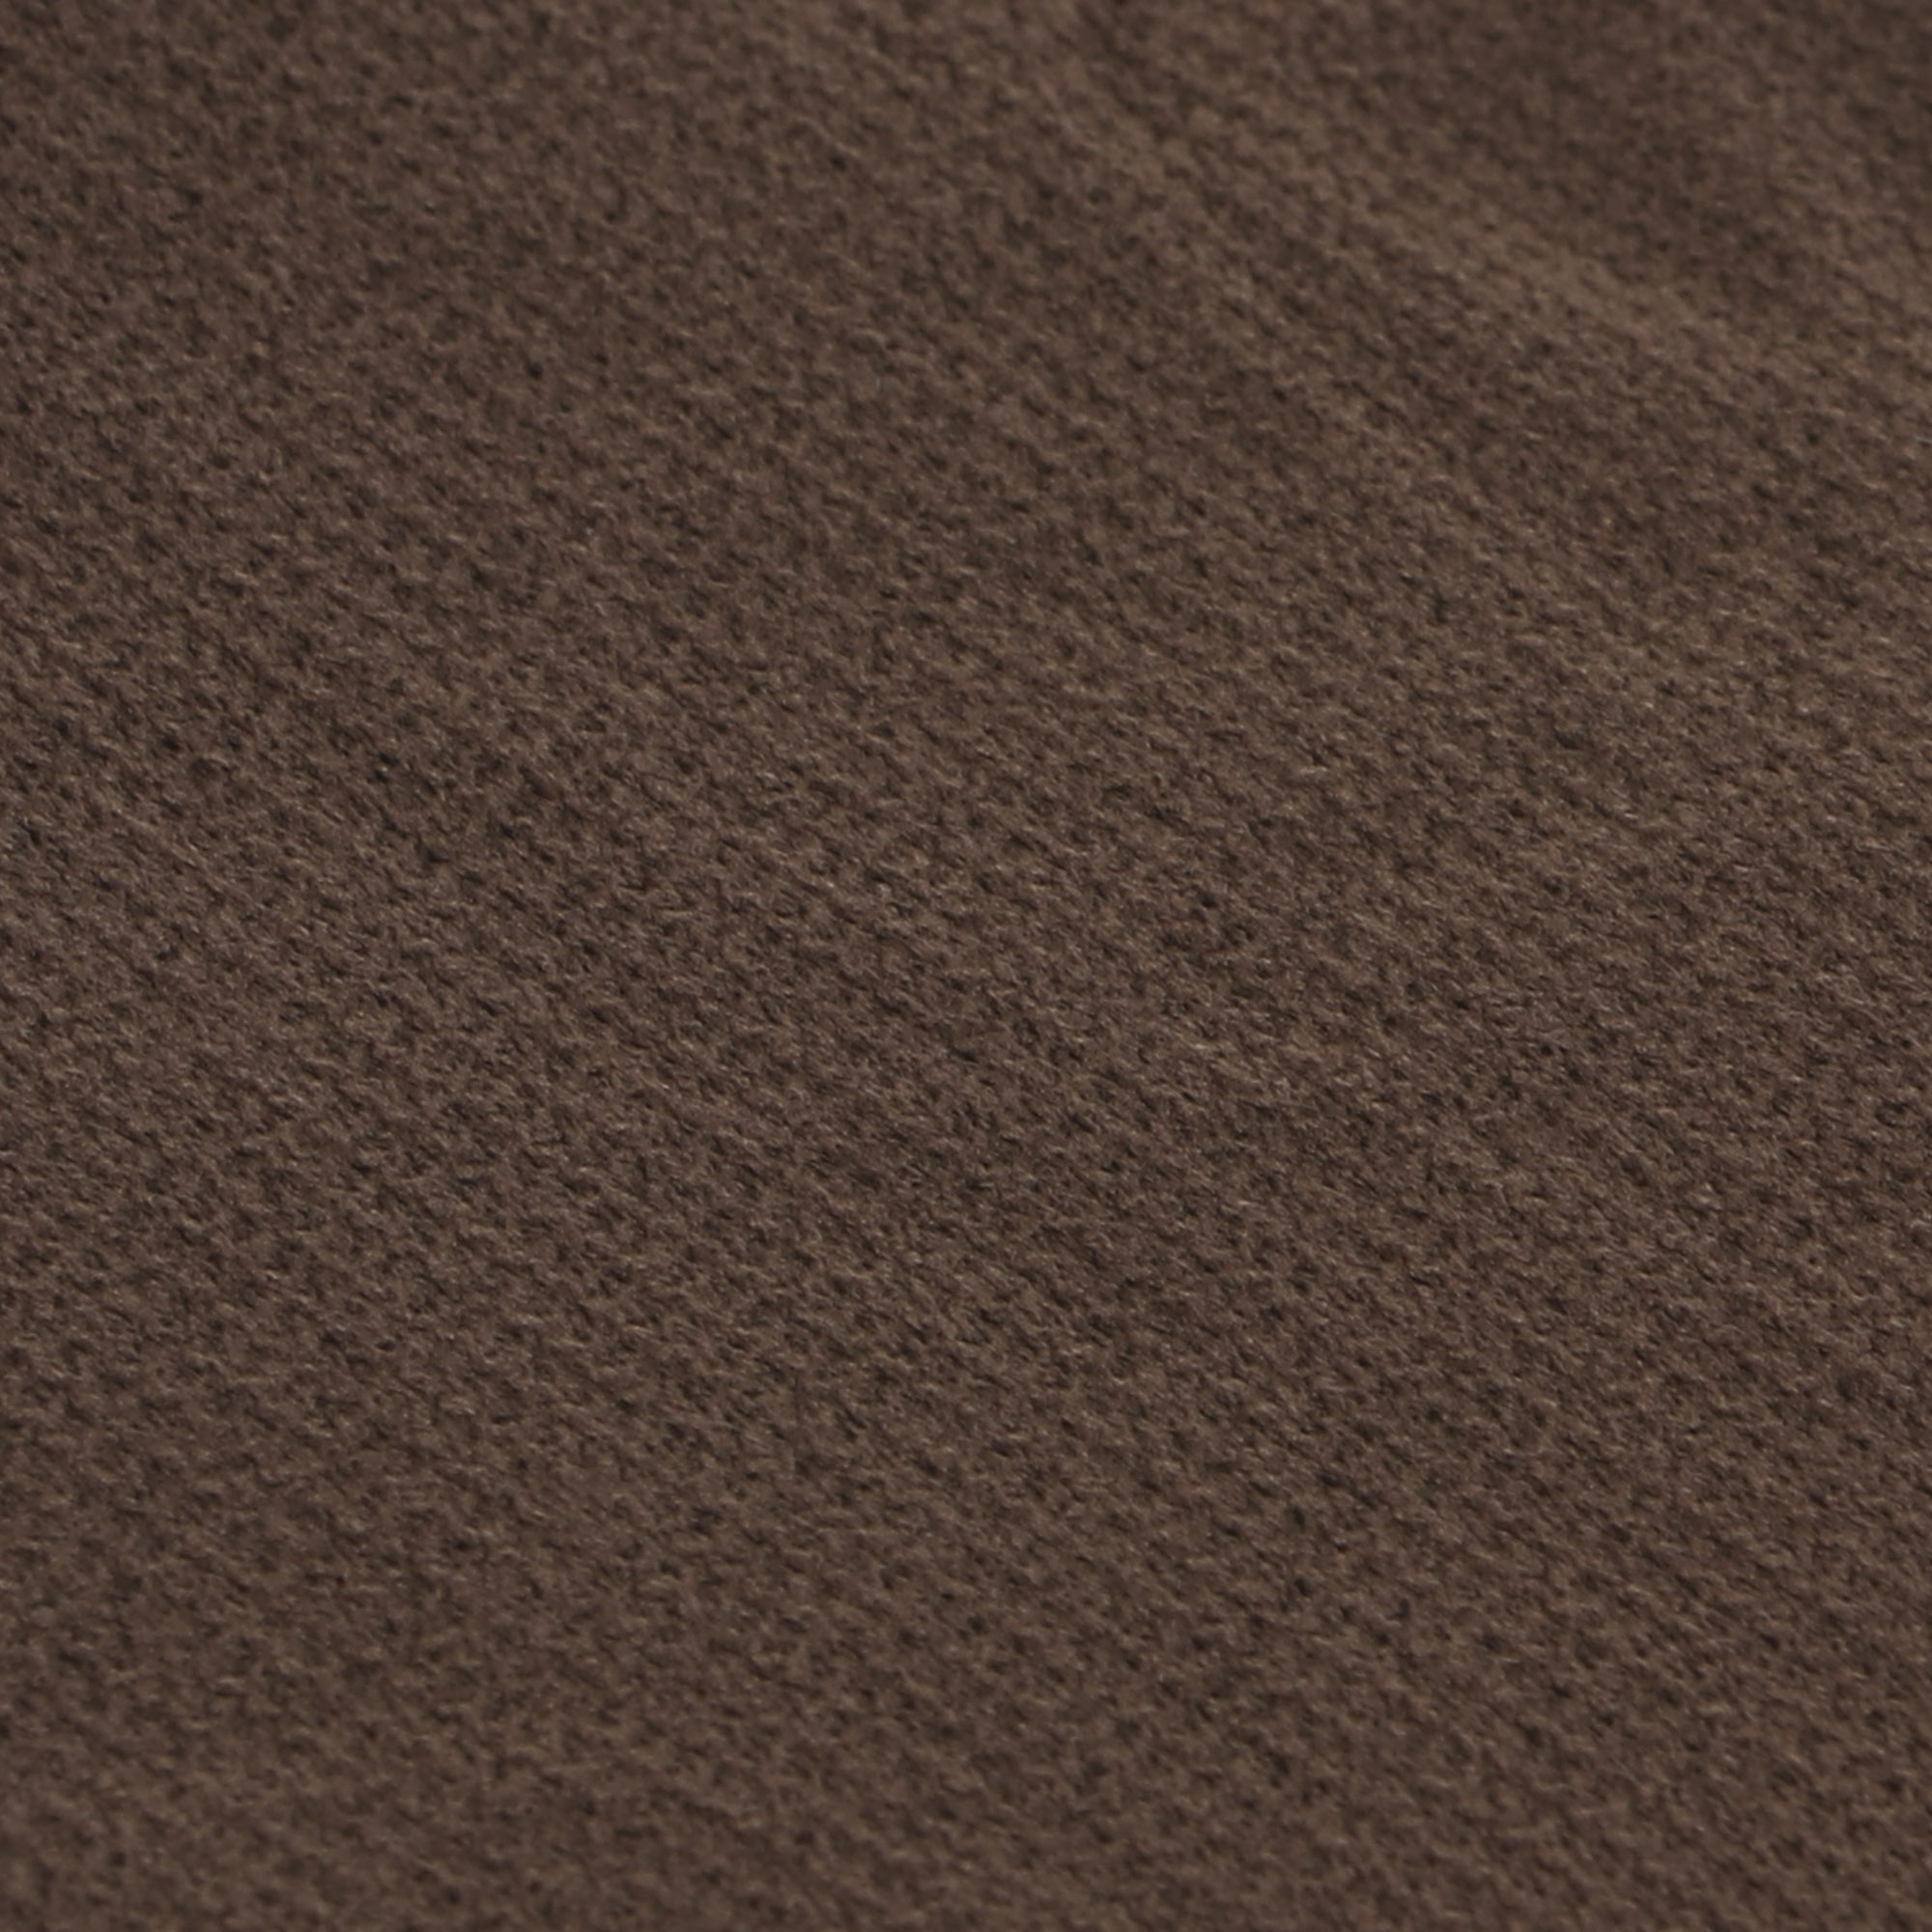 Колготки Sanpellegrino Support 20 Comfort Castoro Maxi, цвет тёмно-коричневый, размер 5 - фото 2